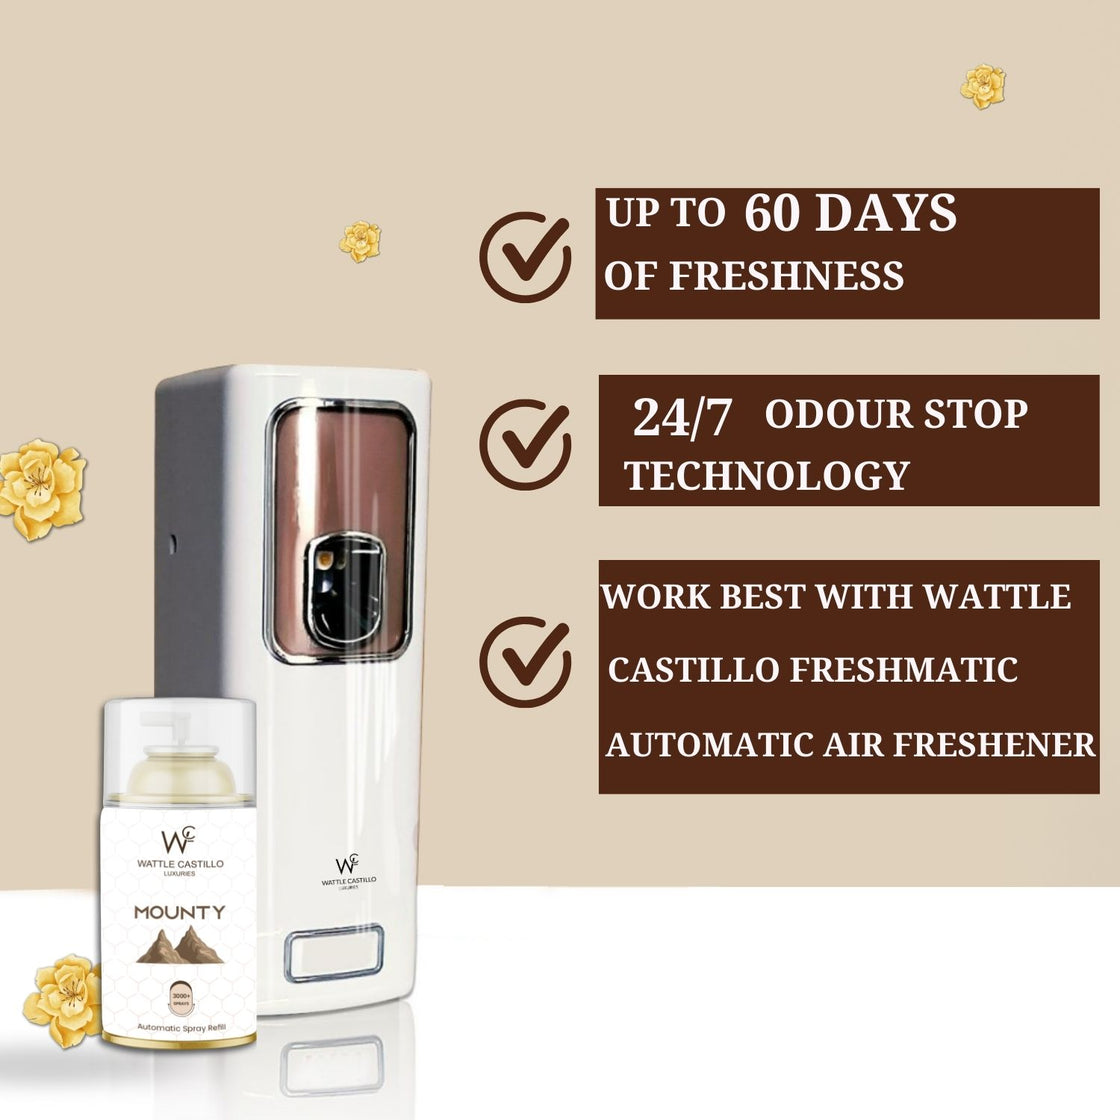 Wattle Castillo Mounty Automatic Room Fresheners Refill (265ml) & 3000+ Sprays Guaranteed Lasts up to 80 days